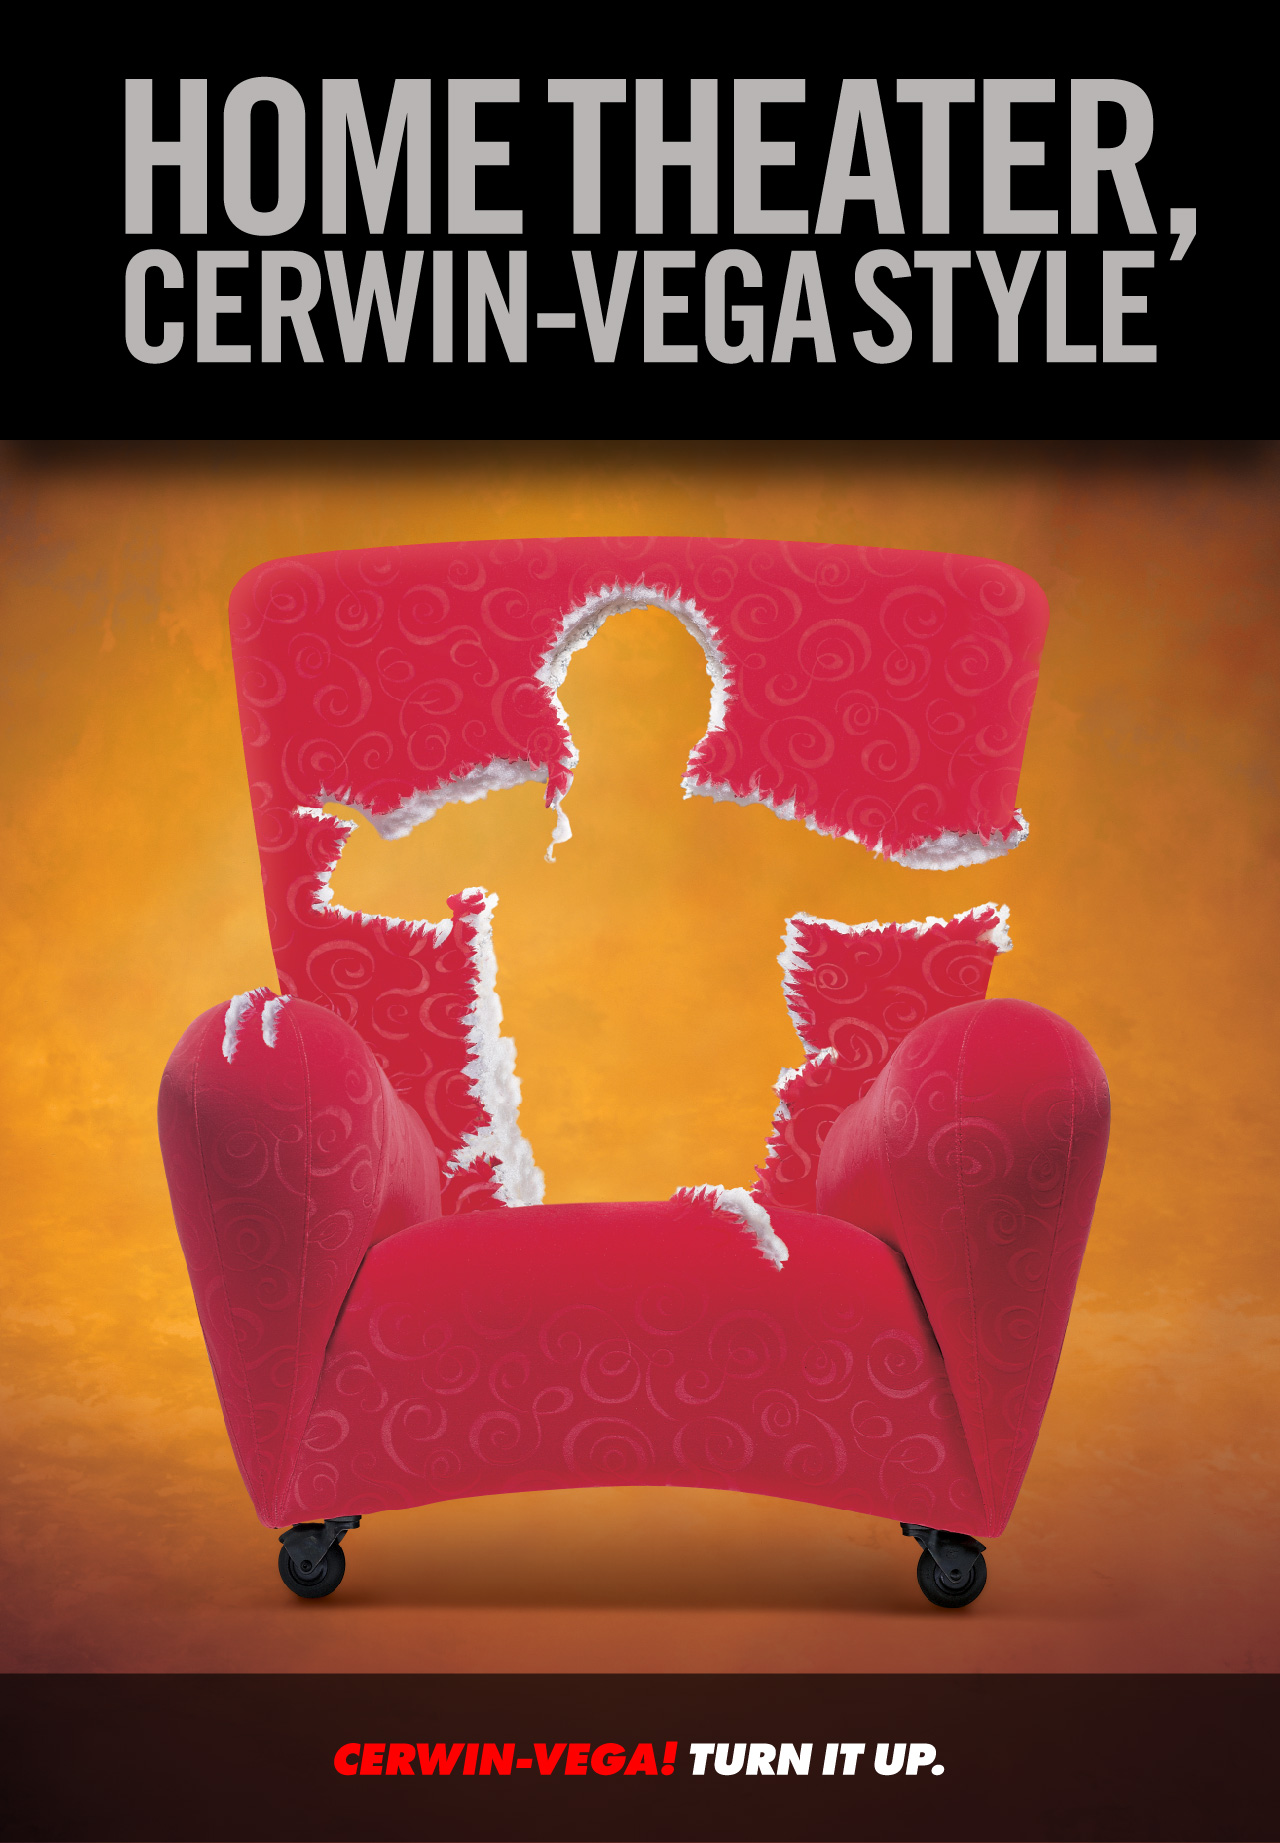 Home Theater, Cerwin-Vega Style, Cerwin-Vega